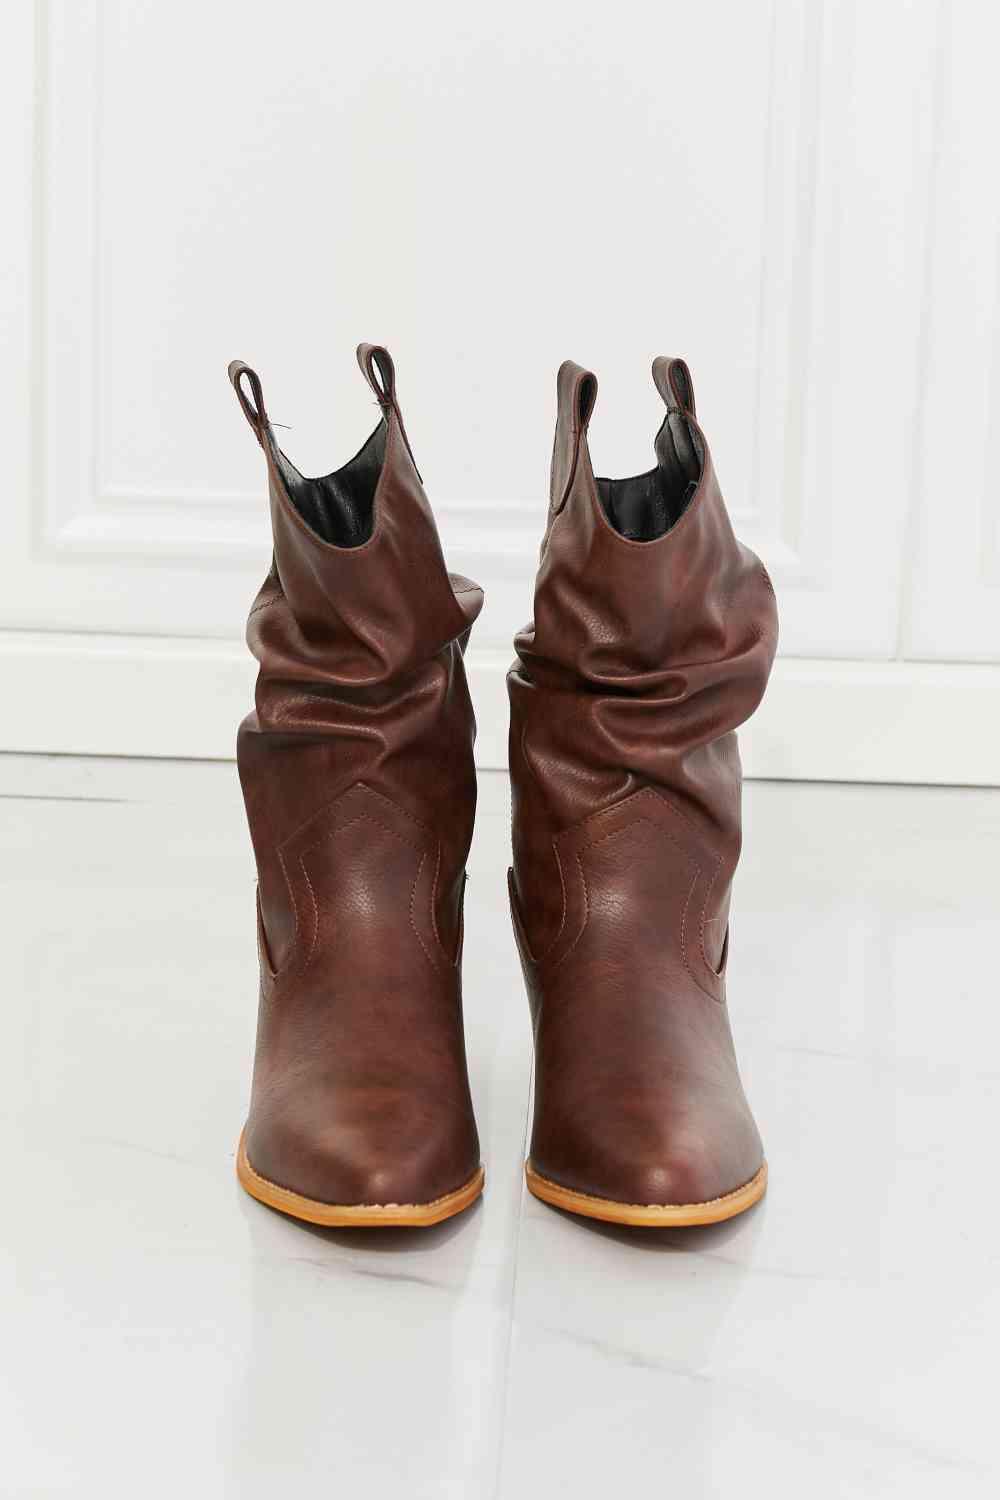 MMShoes Better in Texas Scrunch Cowboy Boots in Brown - Bona Fide Fashion